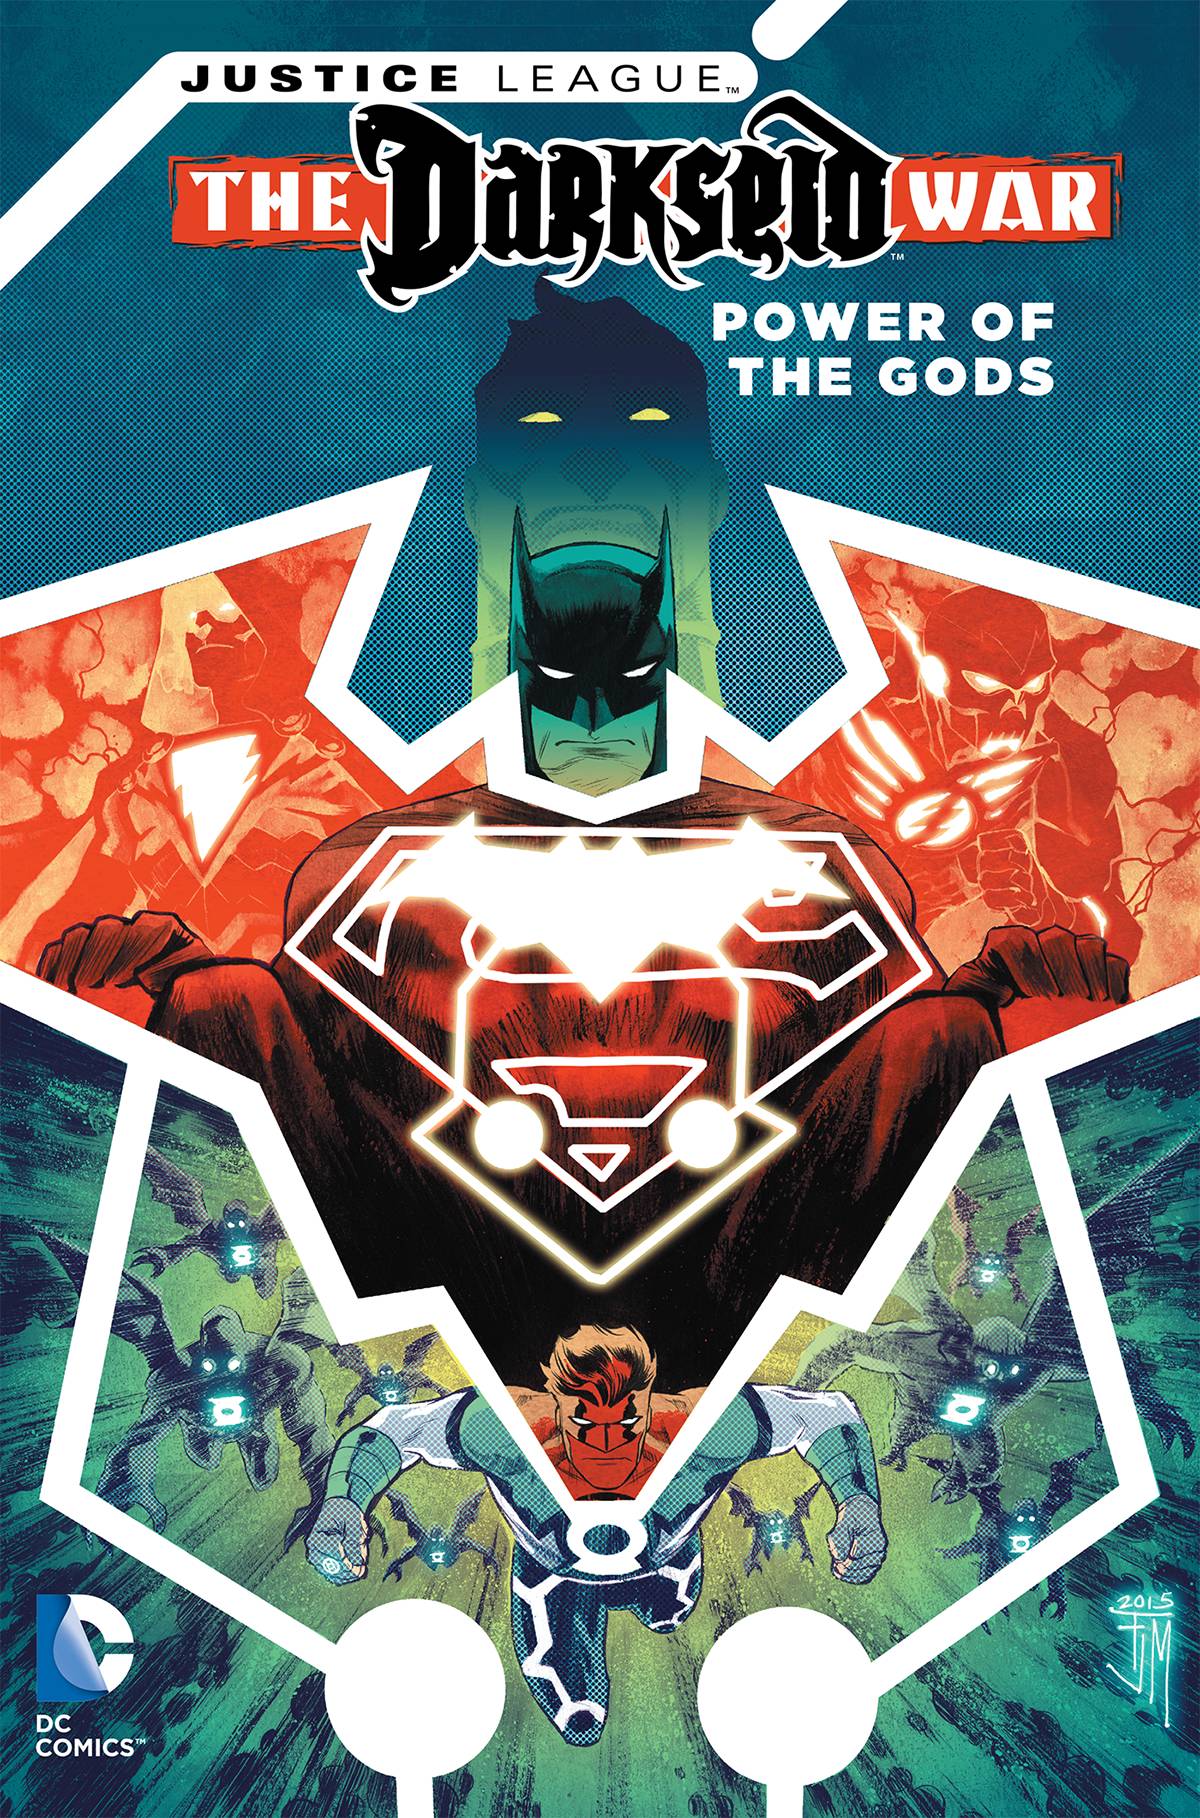 Justice League Darkseid War Power of the Gods